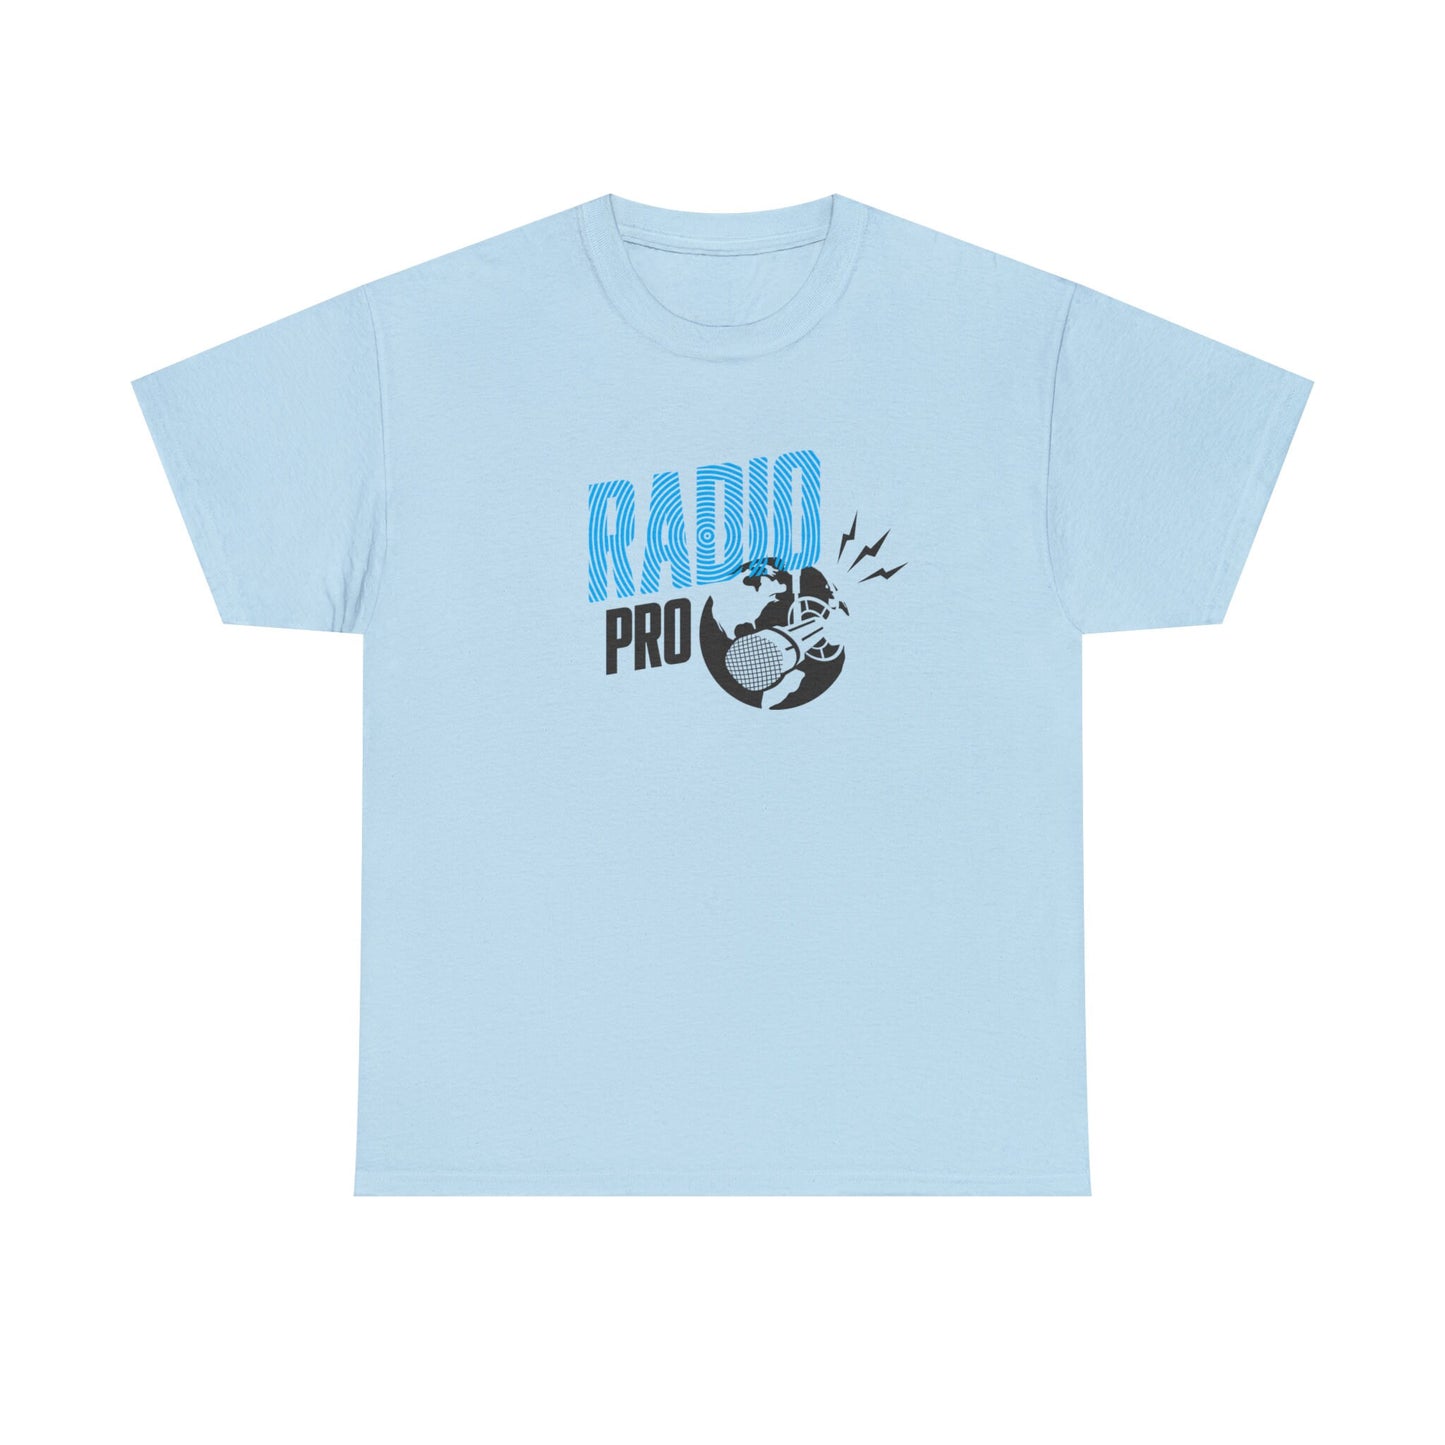 Radio Pro, T-Shirt, Radio Station, Music Industry, DJ, Music Shirts, Radio, Broadcast, Radio Host, Music Merchandise, DJ Equipment